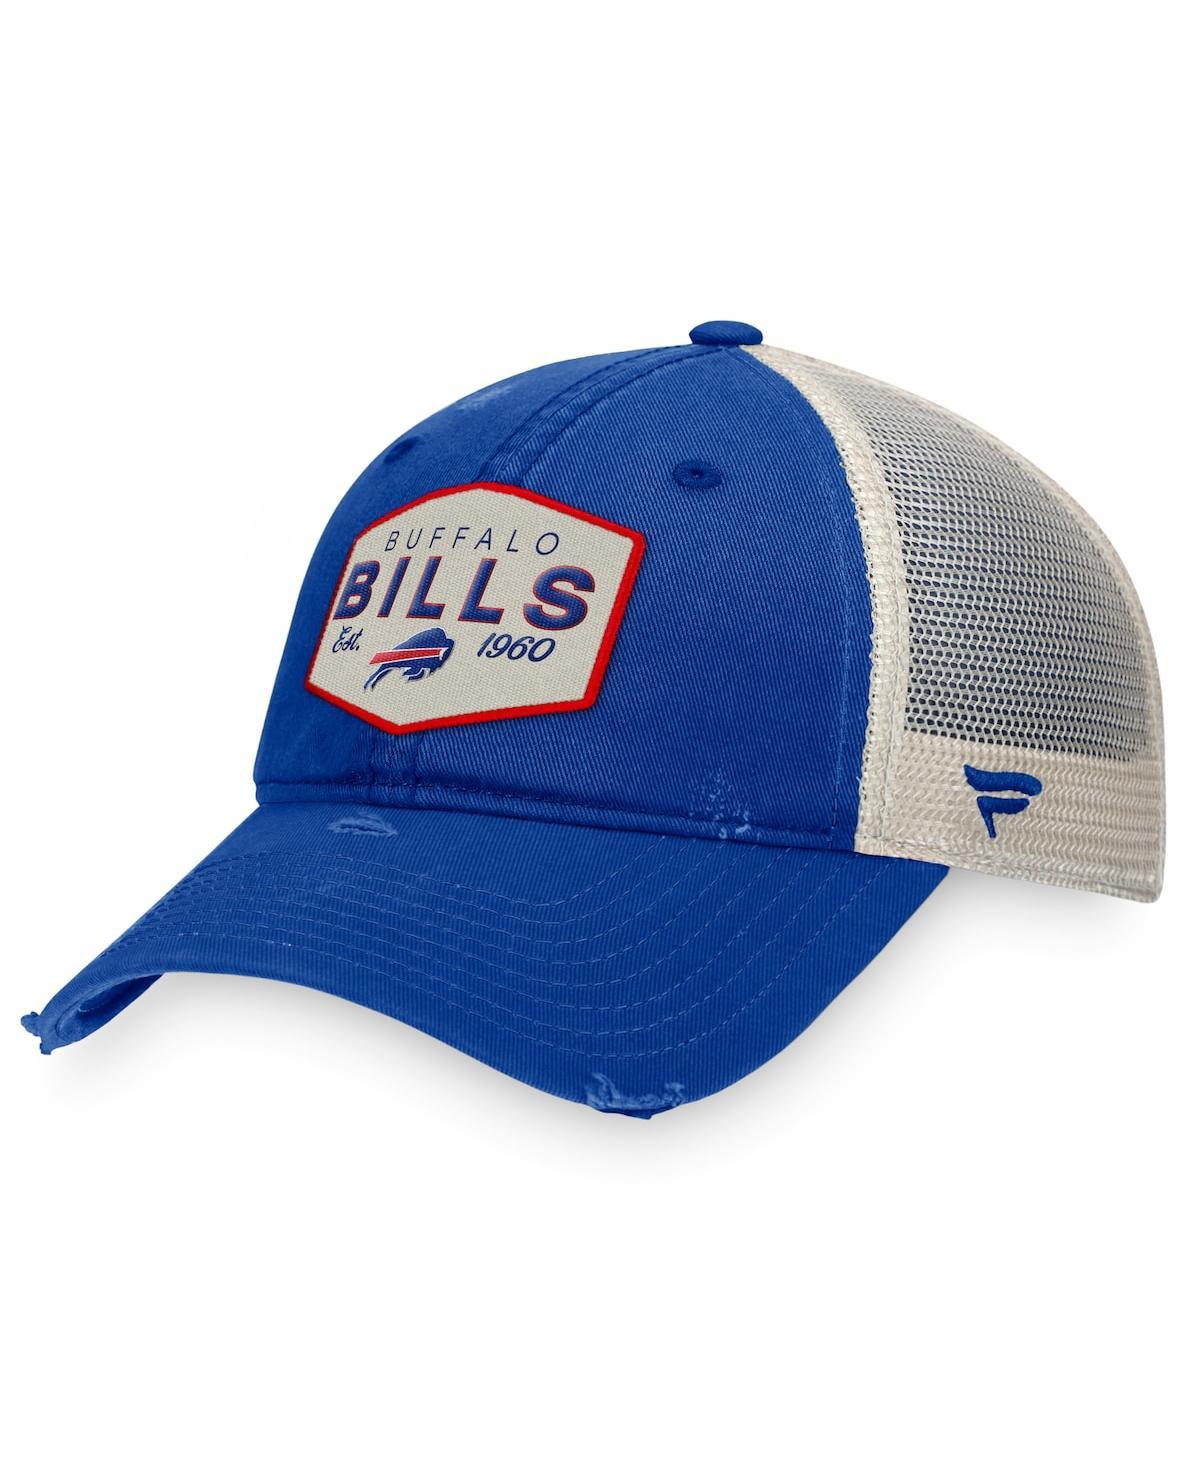 Men's Fanatics Branded Royal St. Louis Blues Heritage Vintage Retro Fitted Hat